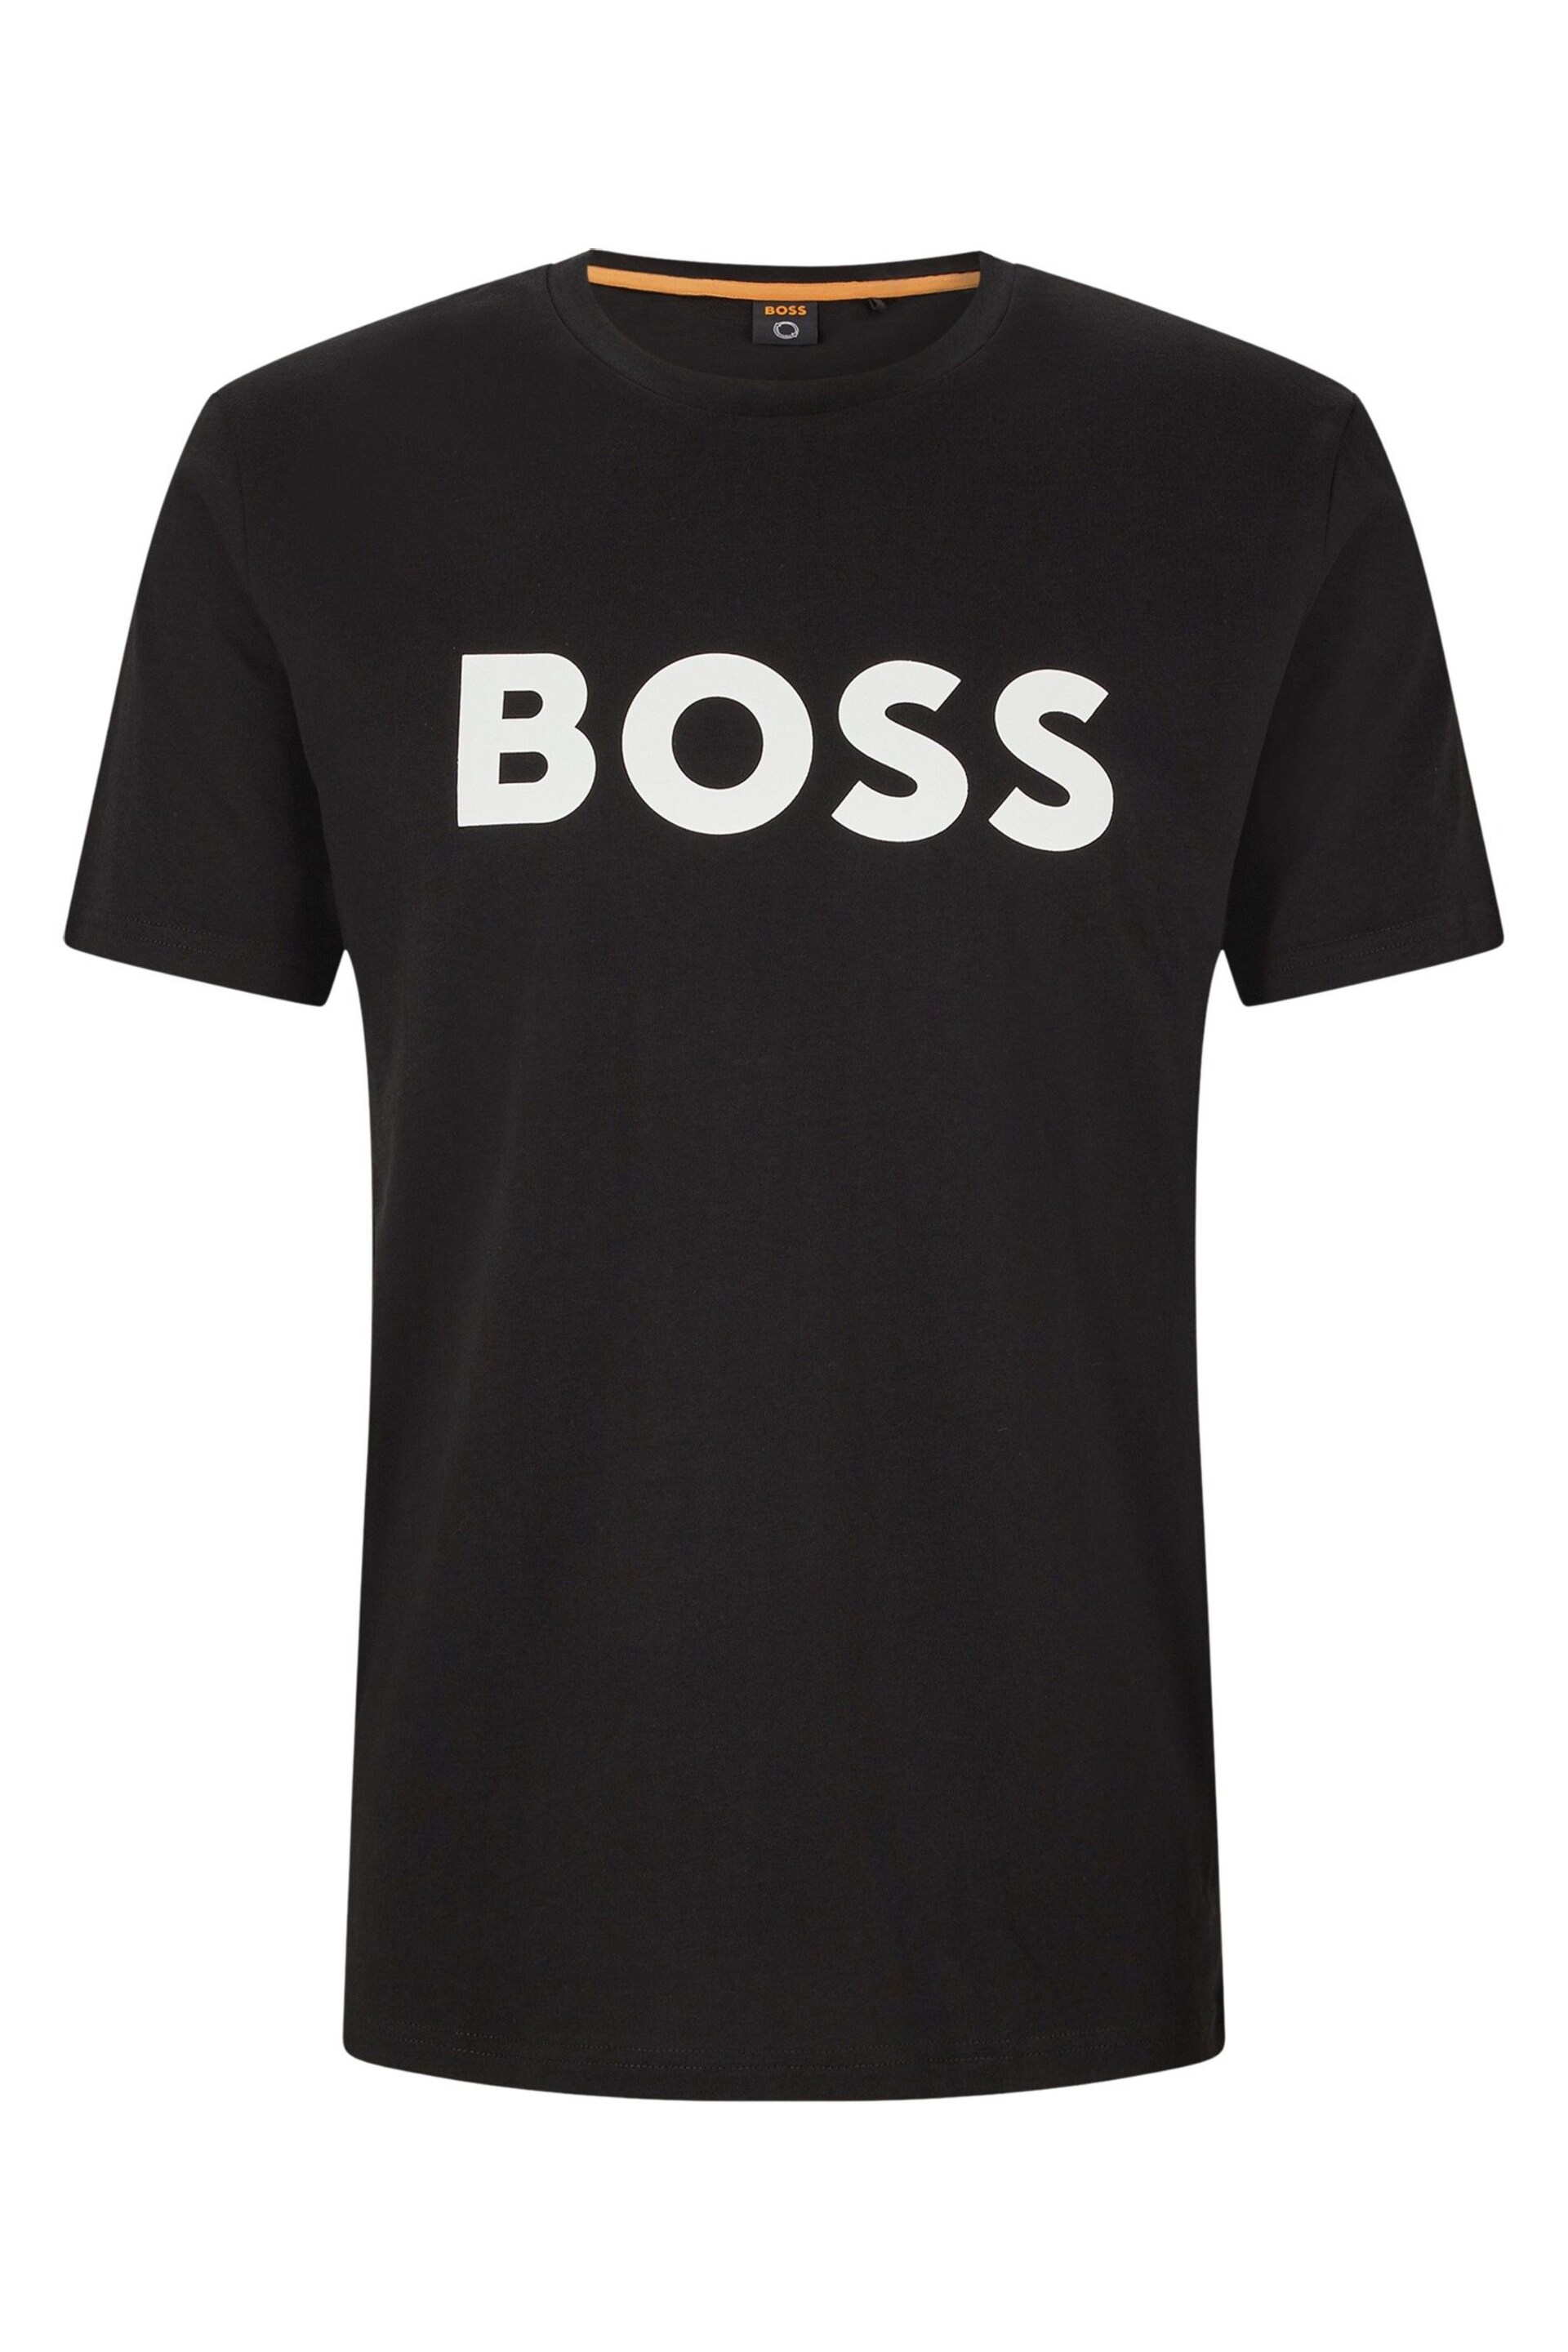 BOSS Black/White Logo Large Chest Logo T-Shirt - Image 6 of 6